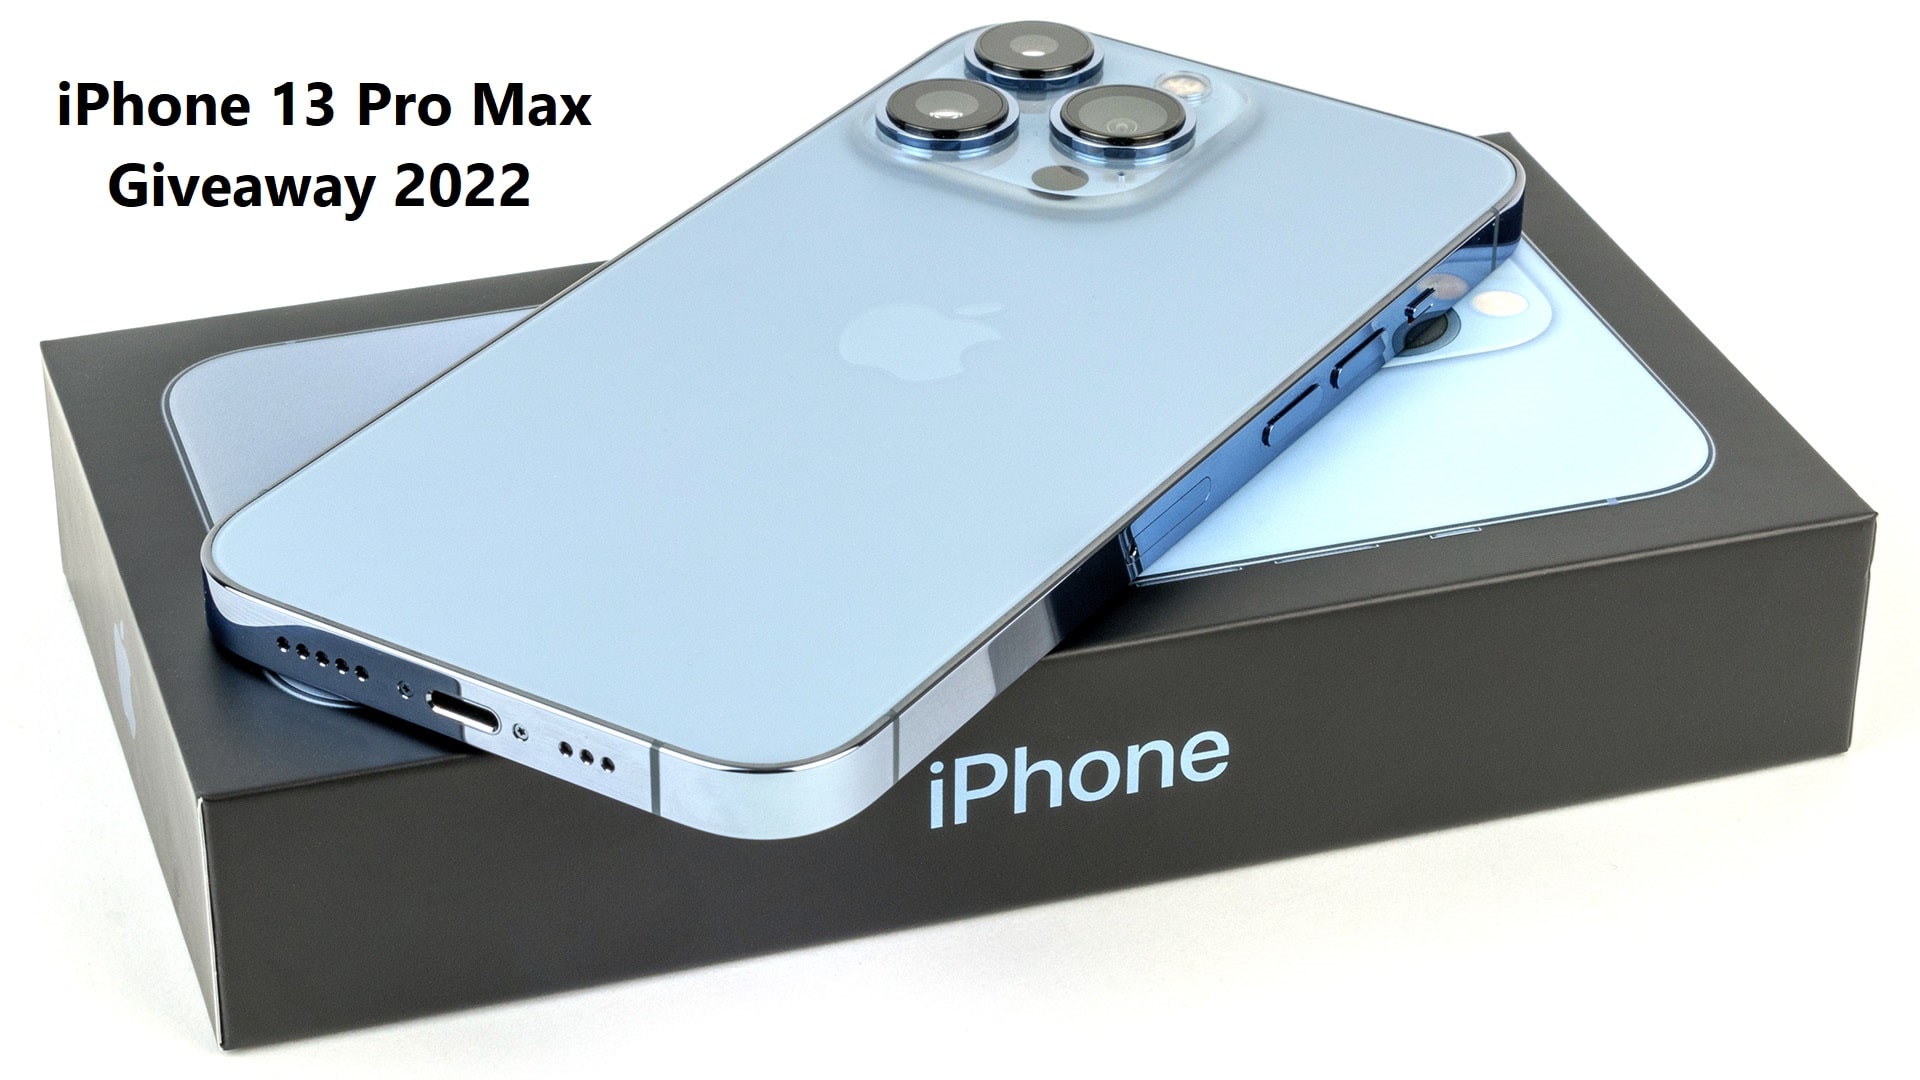 iDrop iPhone 13 Pro Max Giveaway